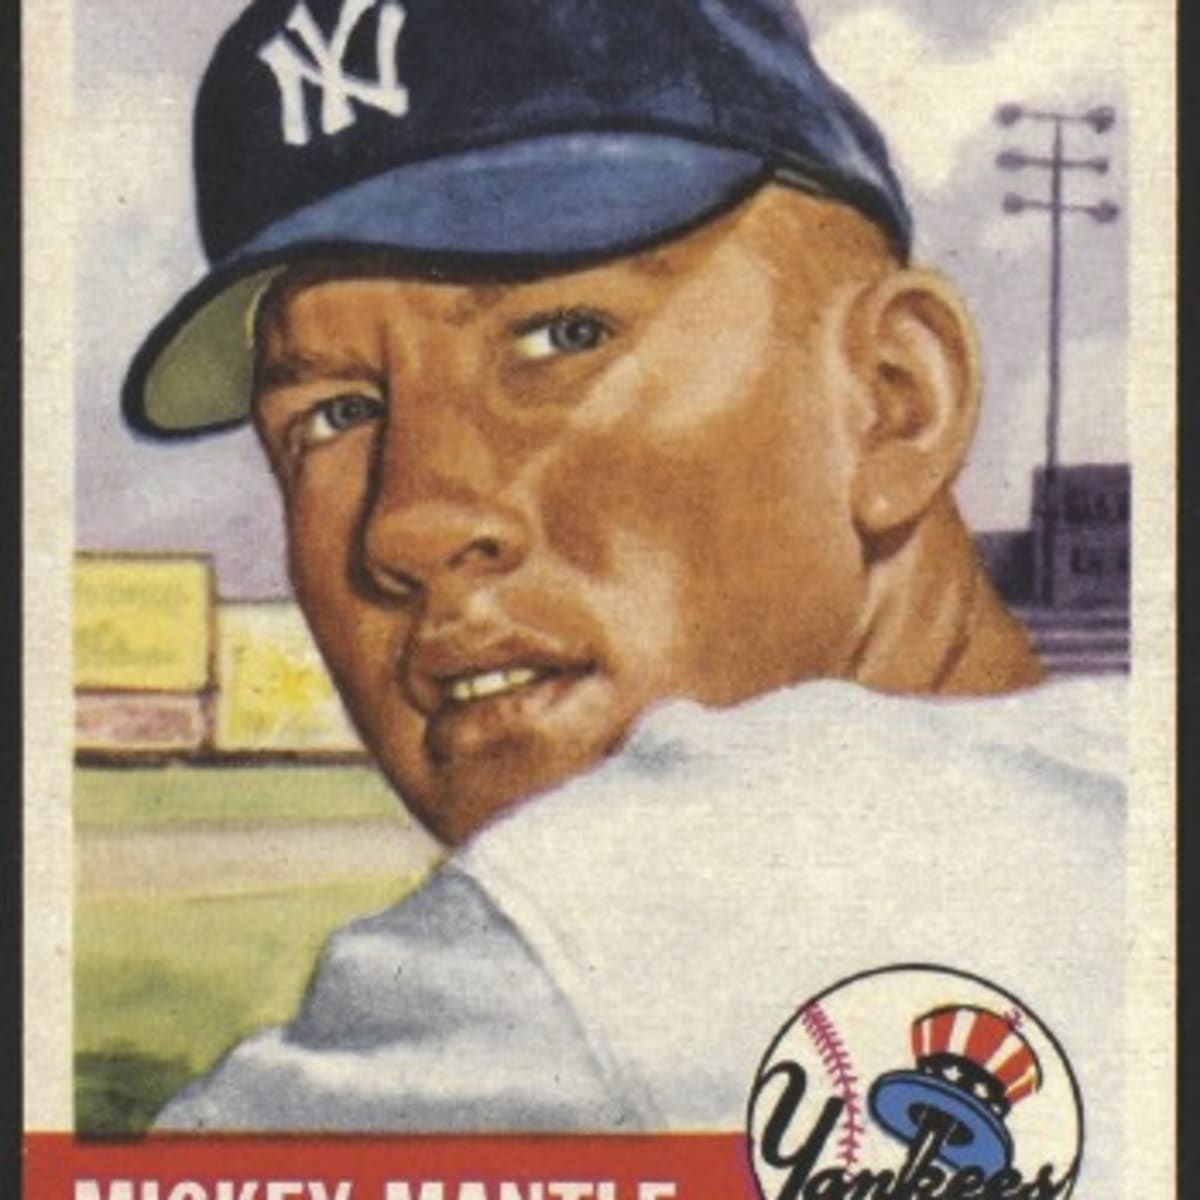 Mickey Mantle Baseball Card Painting